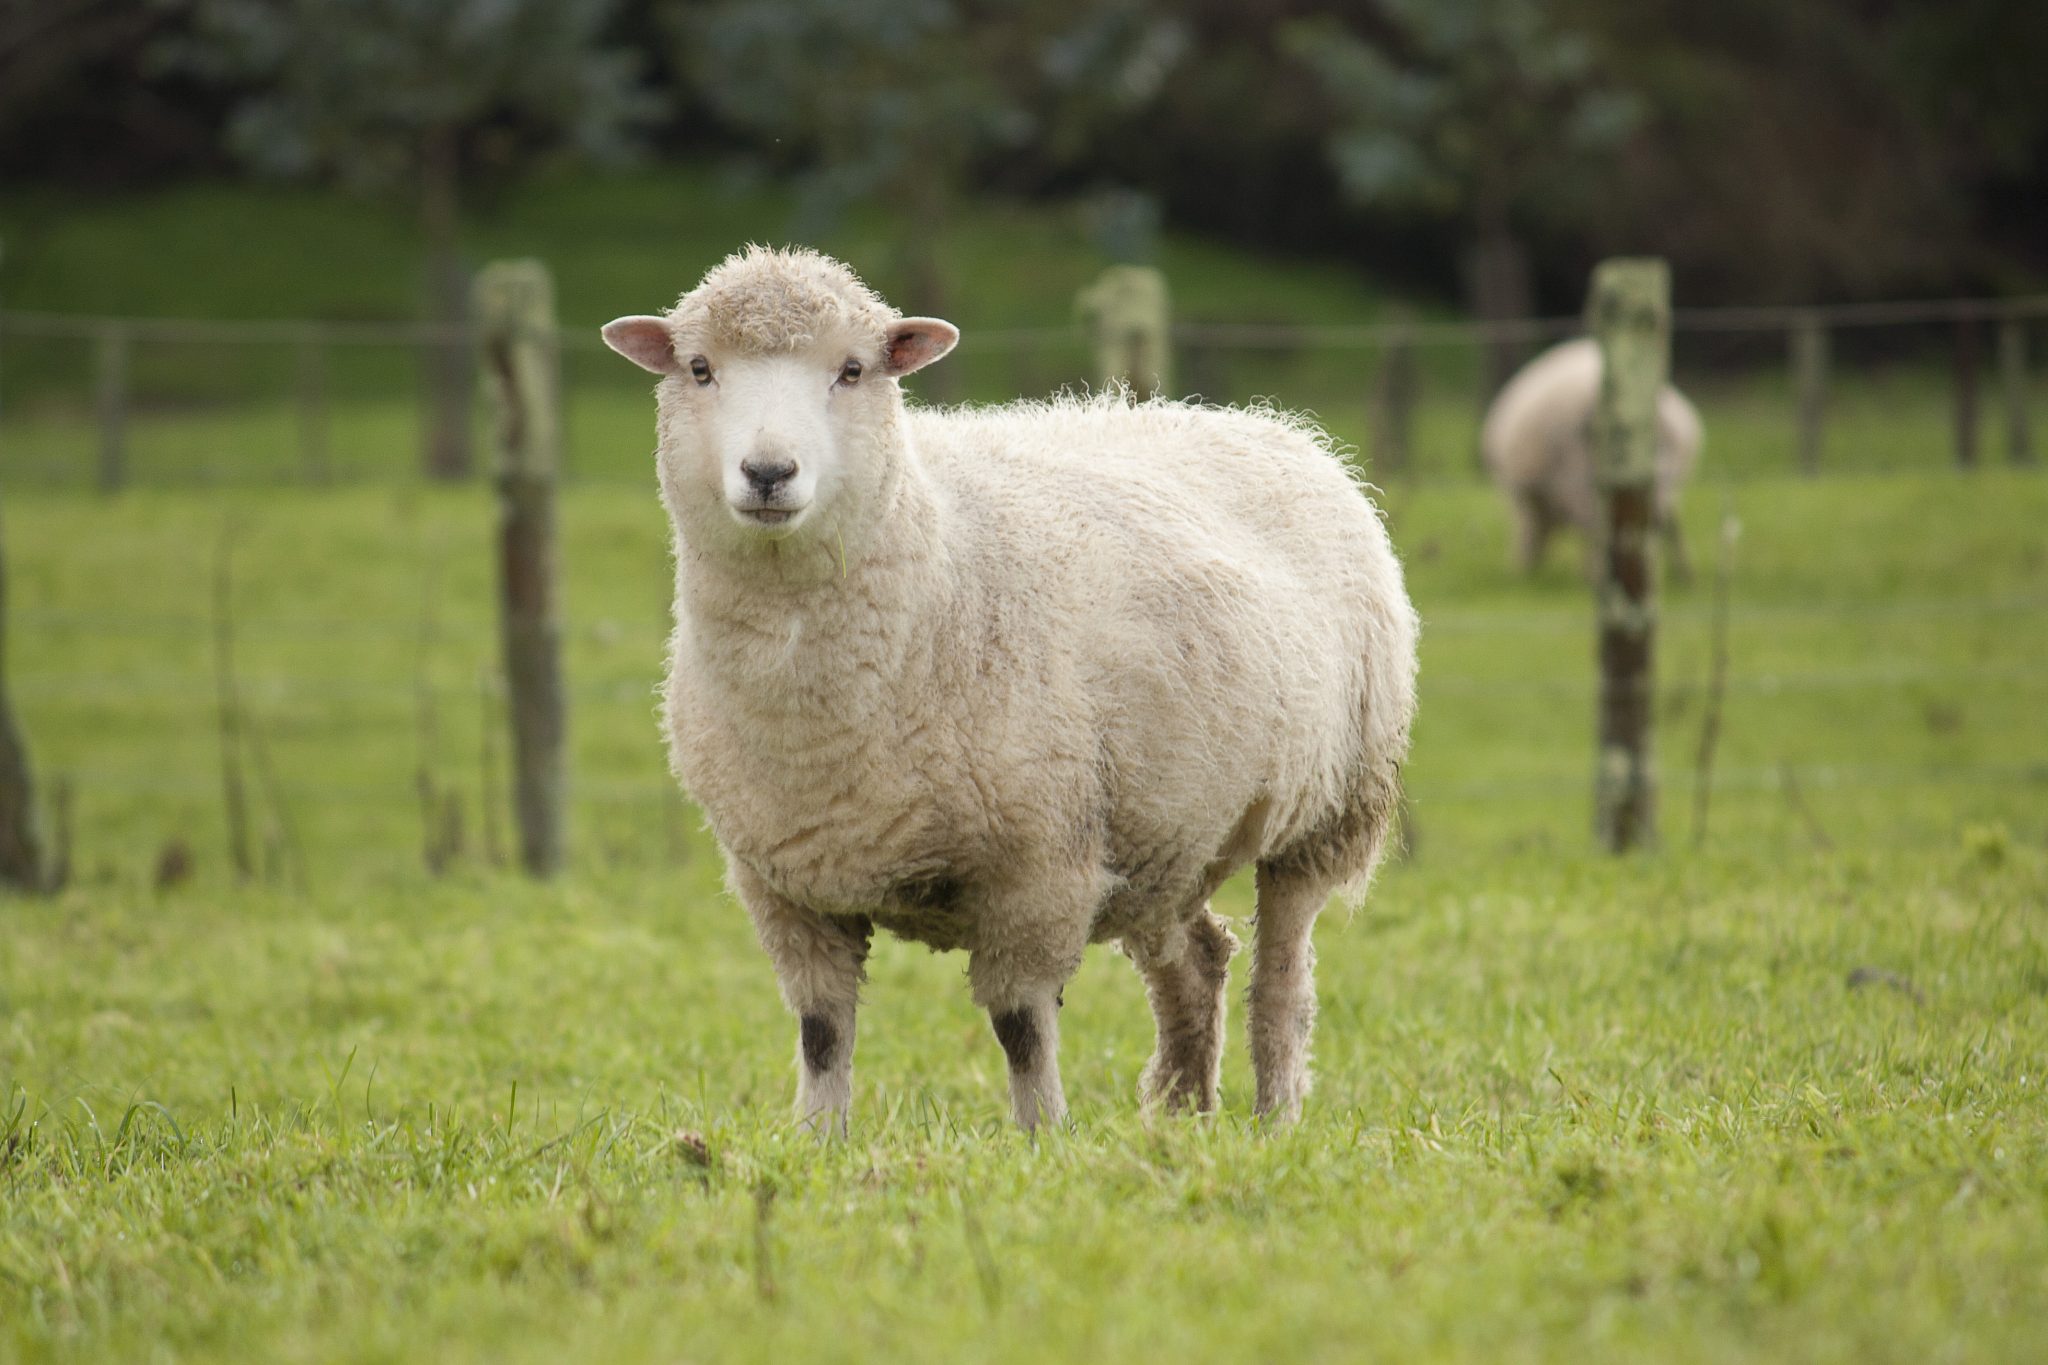 A ewe standing in a lush paddock.